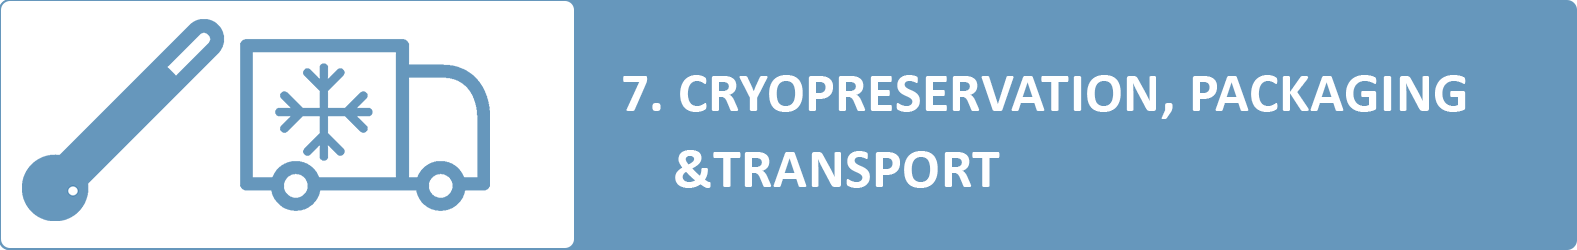 cryopreservation, packaging & transport